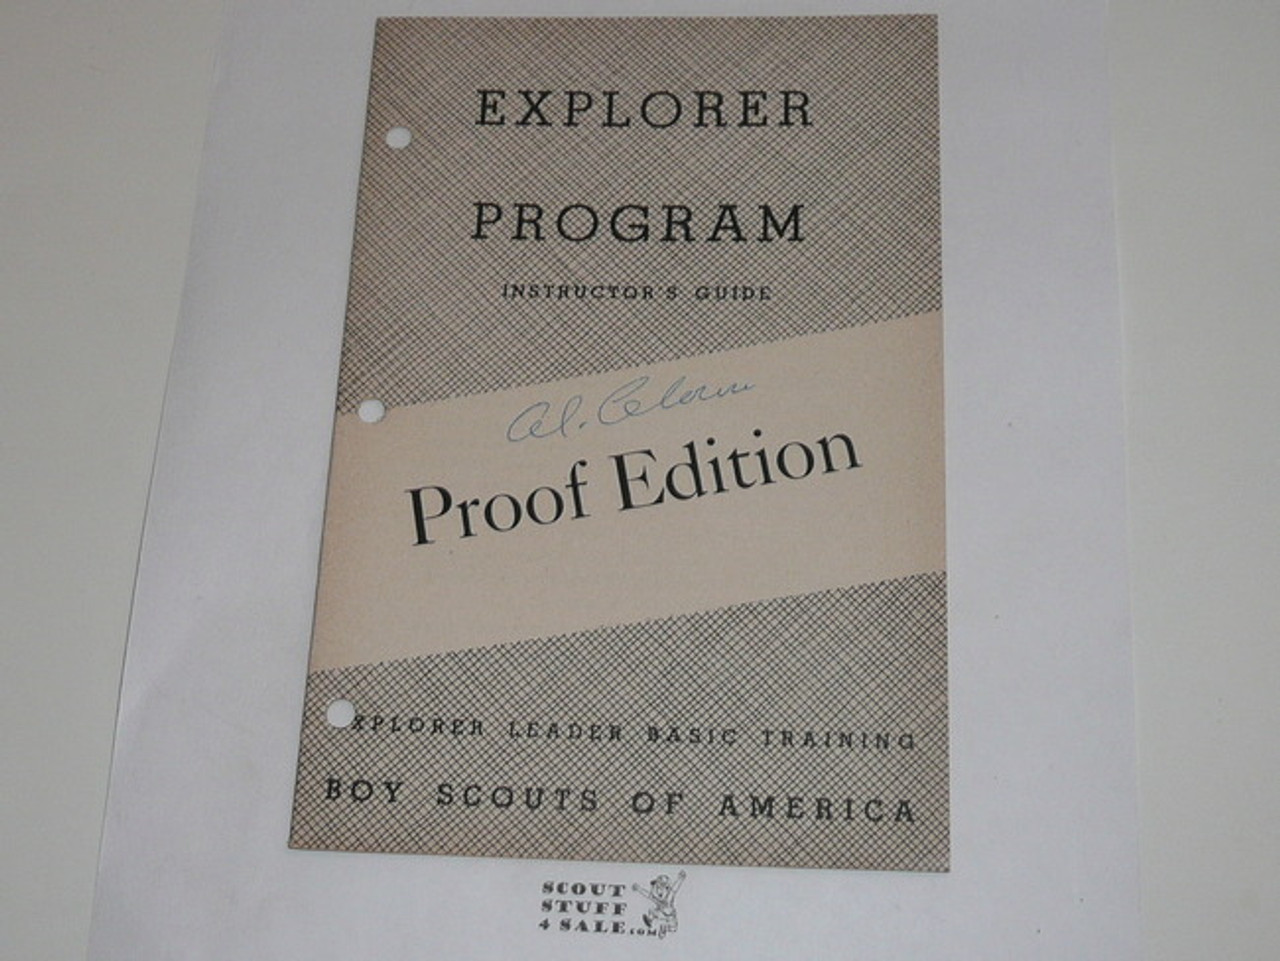 Explorer Leaders' Basic Training, Explorer Program Instructor's Guide, Proof Edition, 10-50 printing